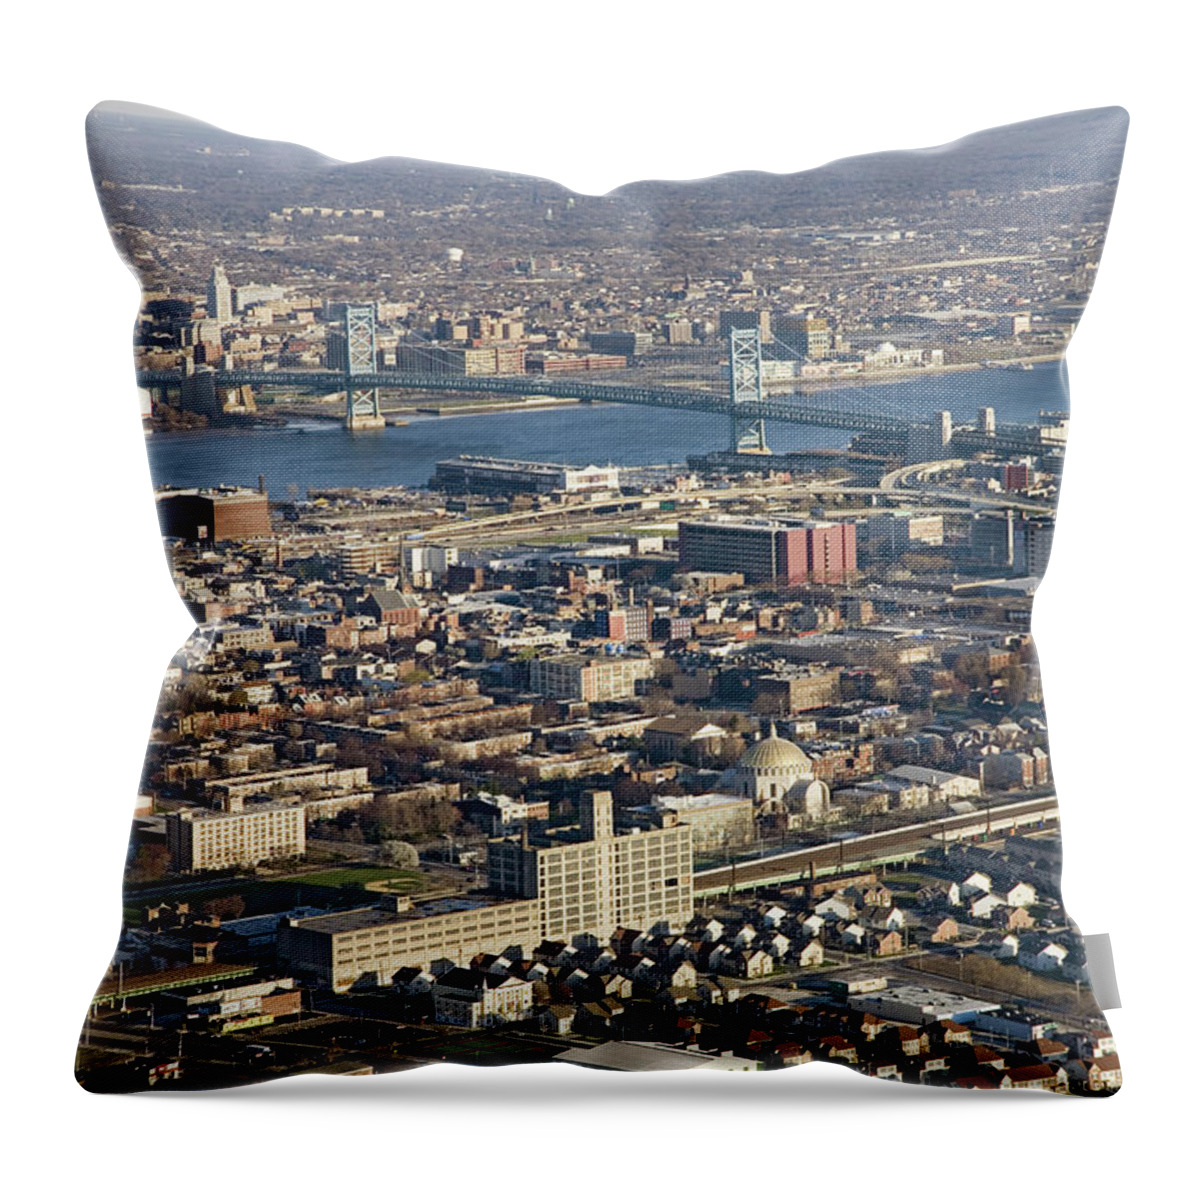 Scenics Throw Pillow featuring the photograph Usa, Pennsylvania, Philadelphia, Aerial by Joseph Sohm-visions Of America